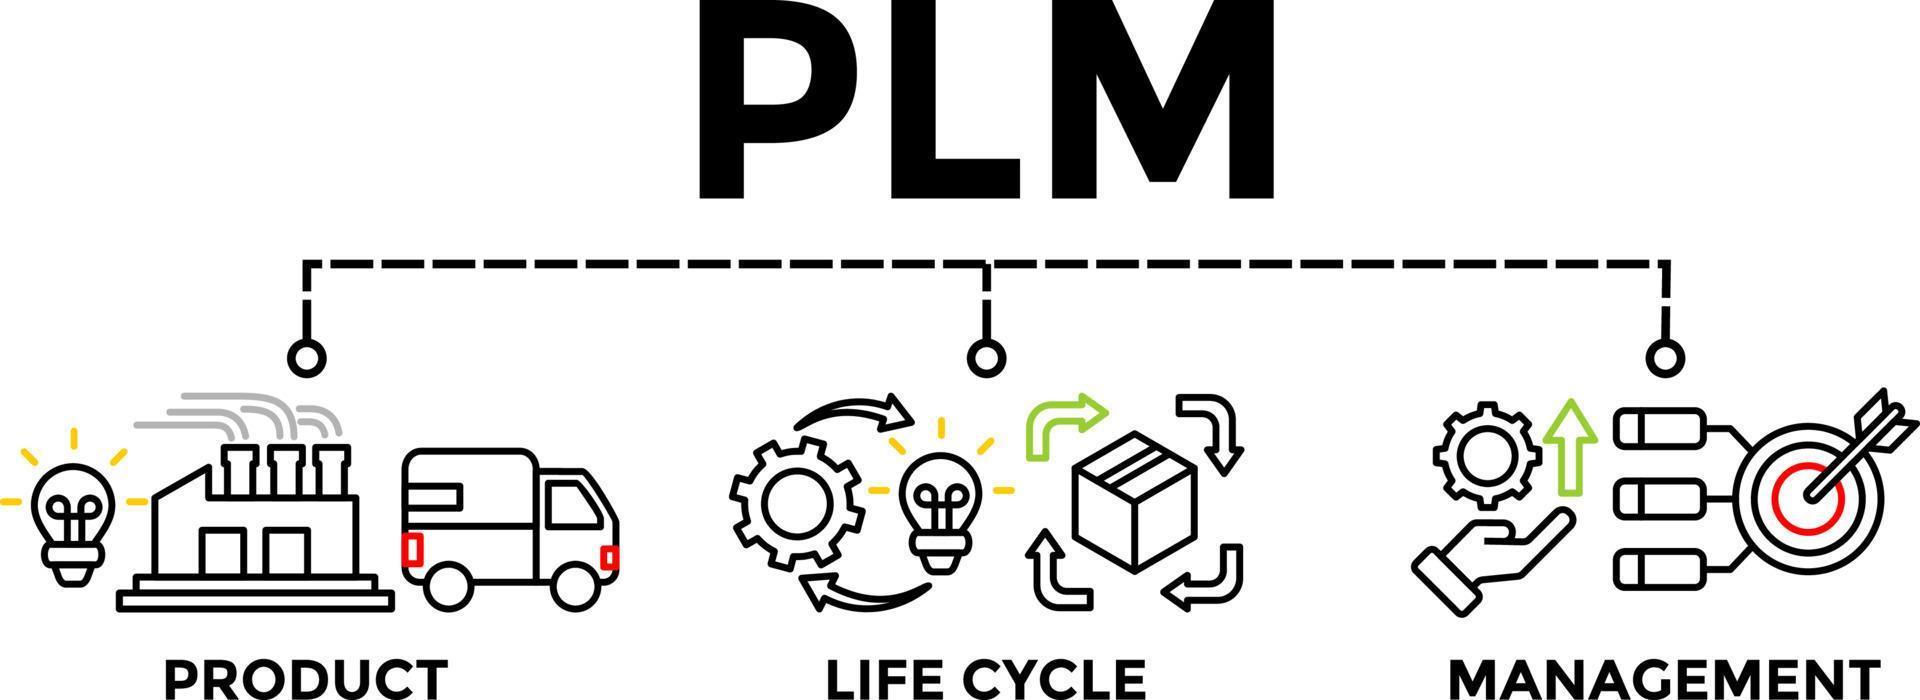 plm - Produktlebenszyklus-Management-Banner-Konzeptillustration mit Symbolen. vektor